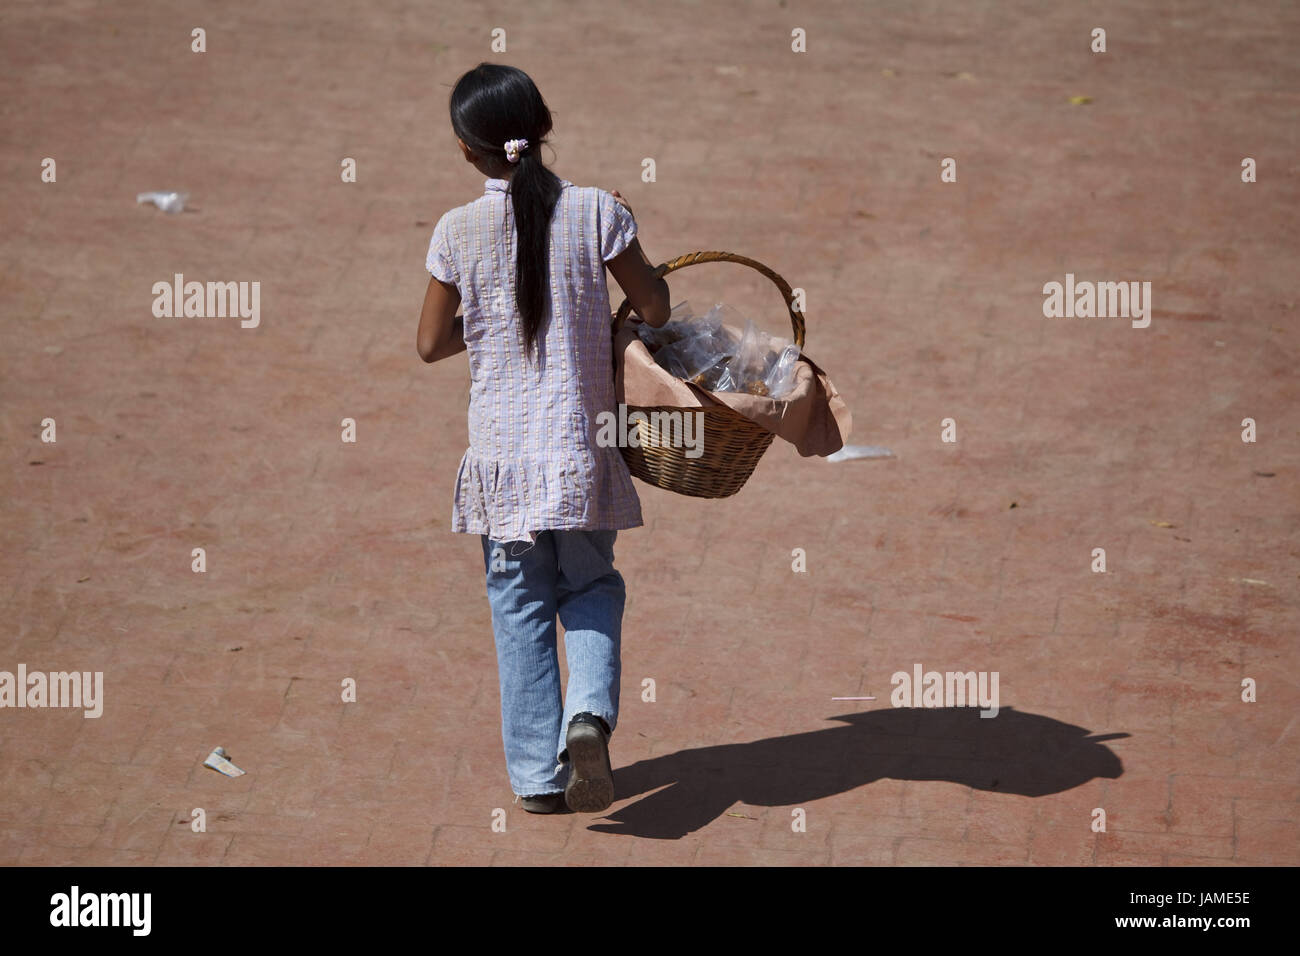 Mexico,Chiapas,Amatenango del Valle,girls,basket,goods,sell, Stock Photo